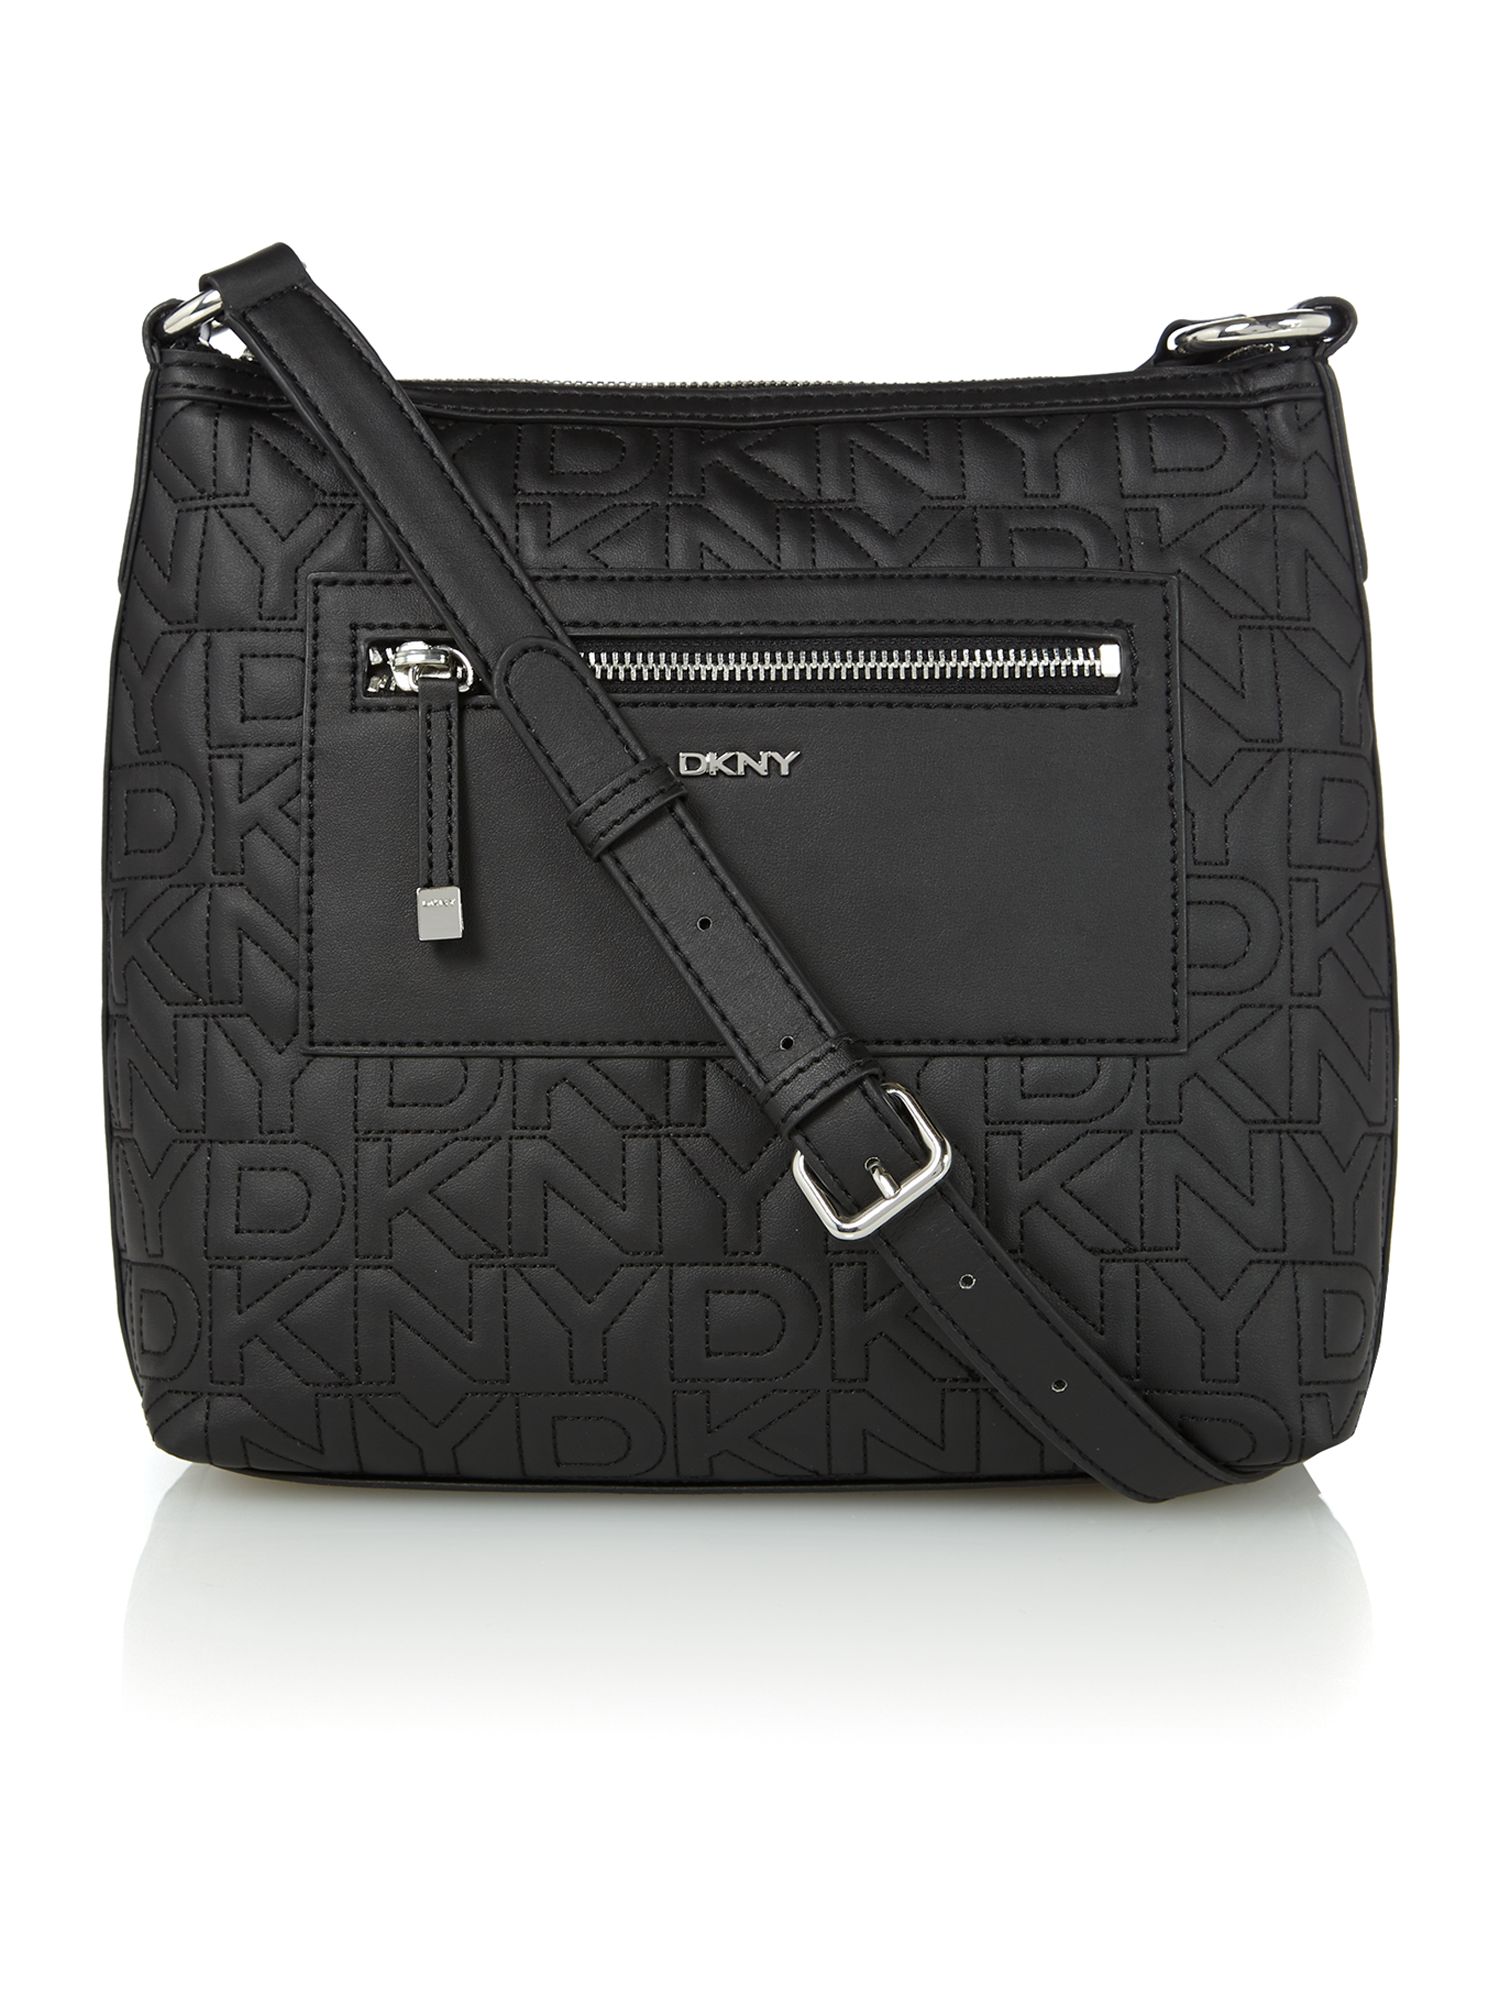 Dkny Black Quilted Logo Crossbody Bag in Black | Lyst